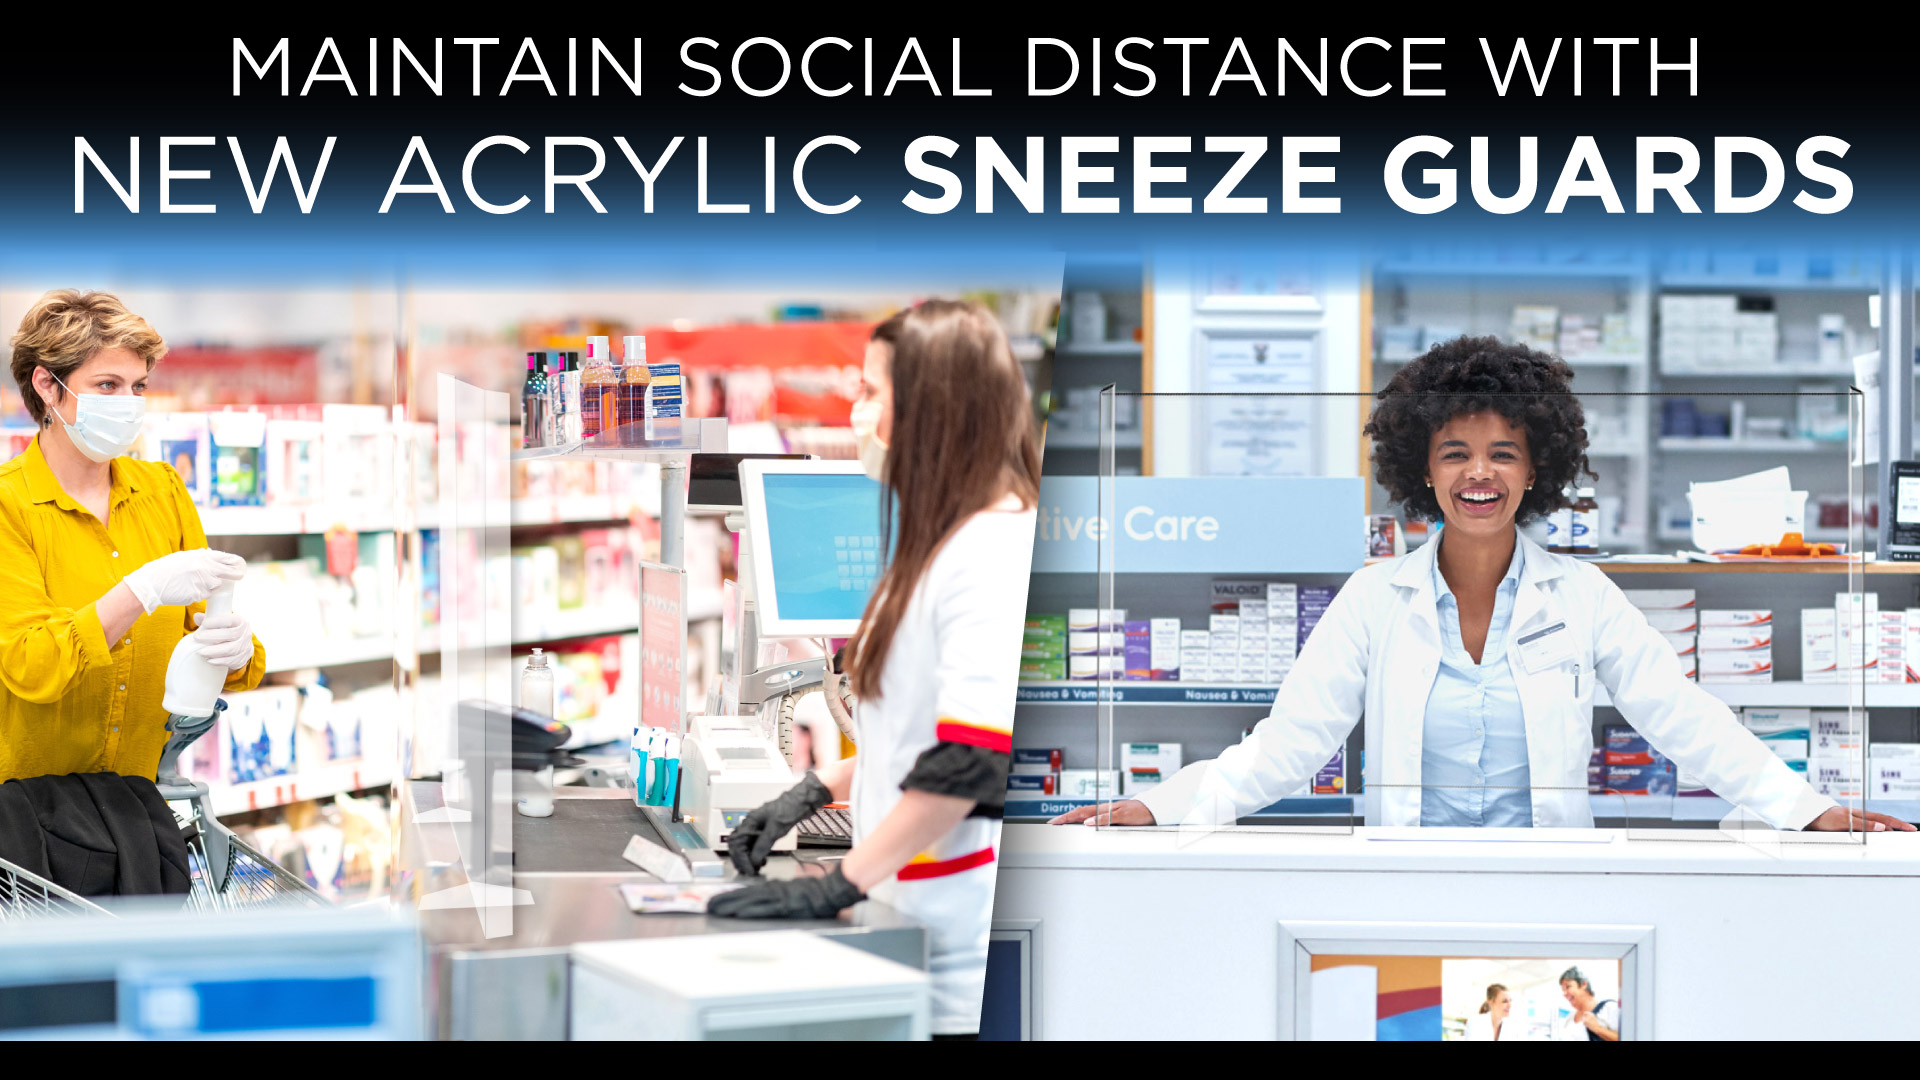 Acrylic sneeze guard graphic